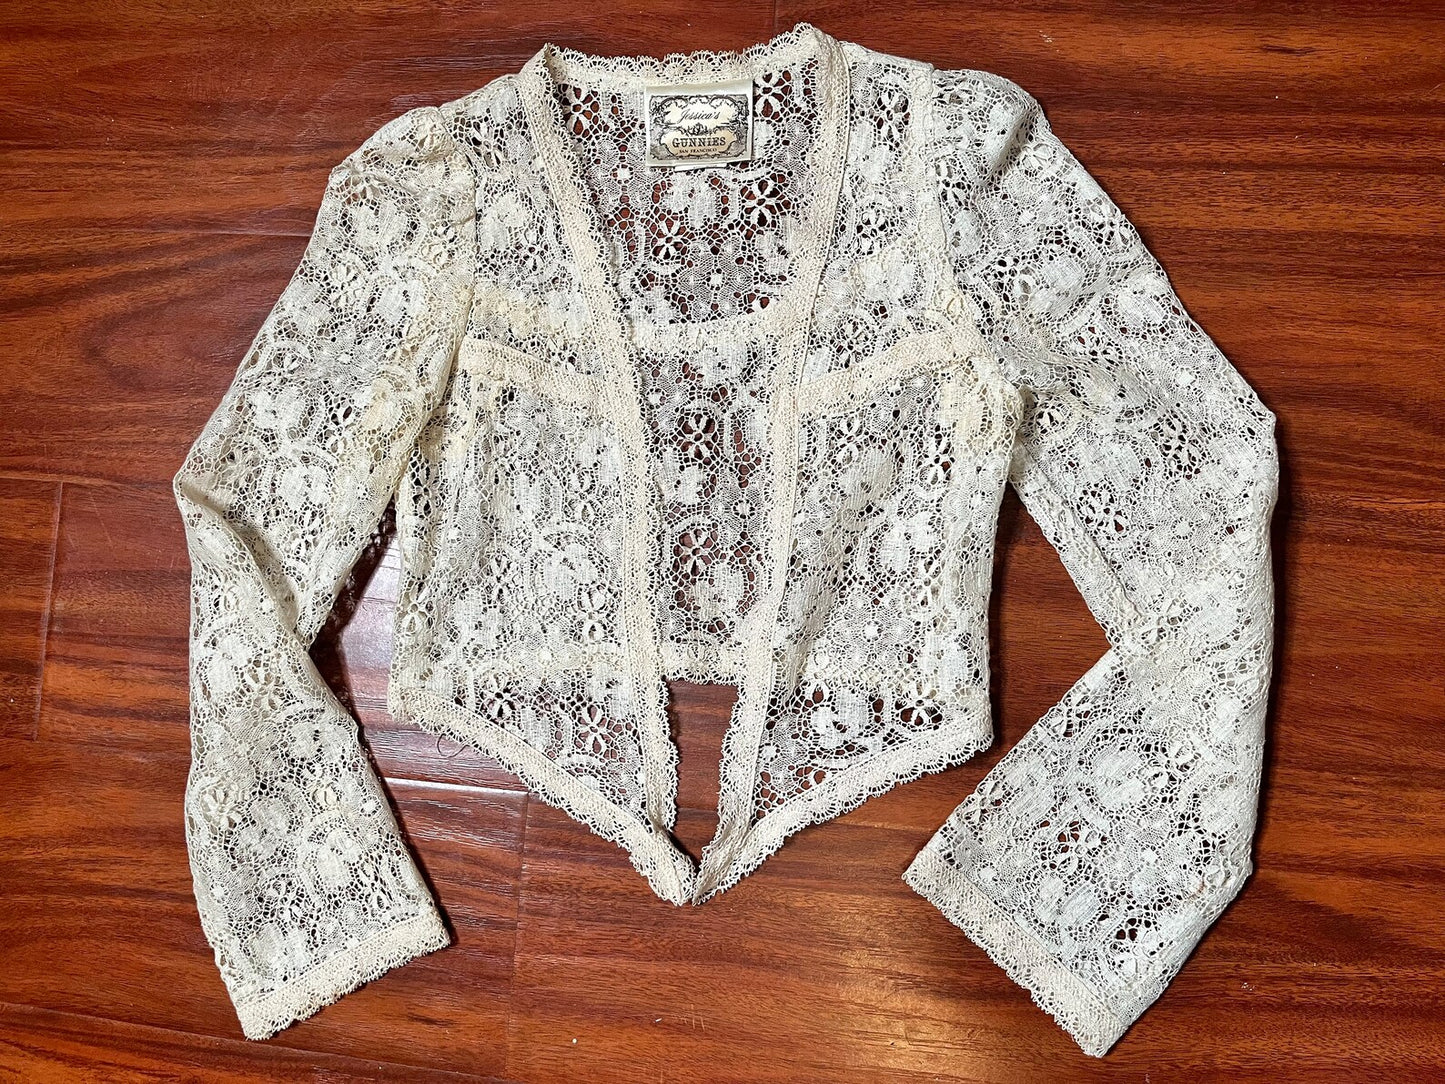 Vintage 1970’s "Gunne Sax by Jessica McClintock" Crochet Lace Shrug